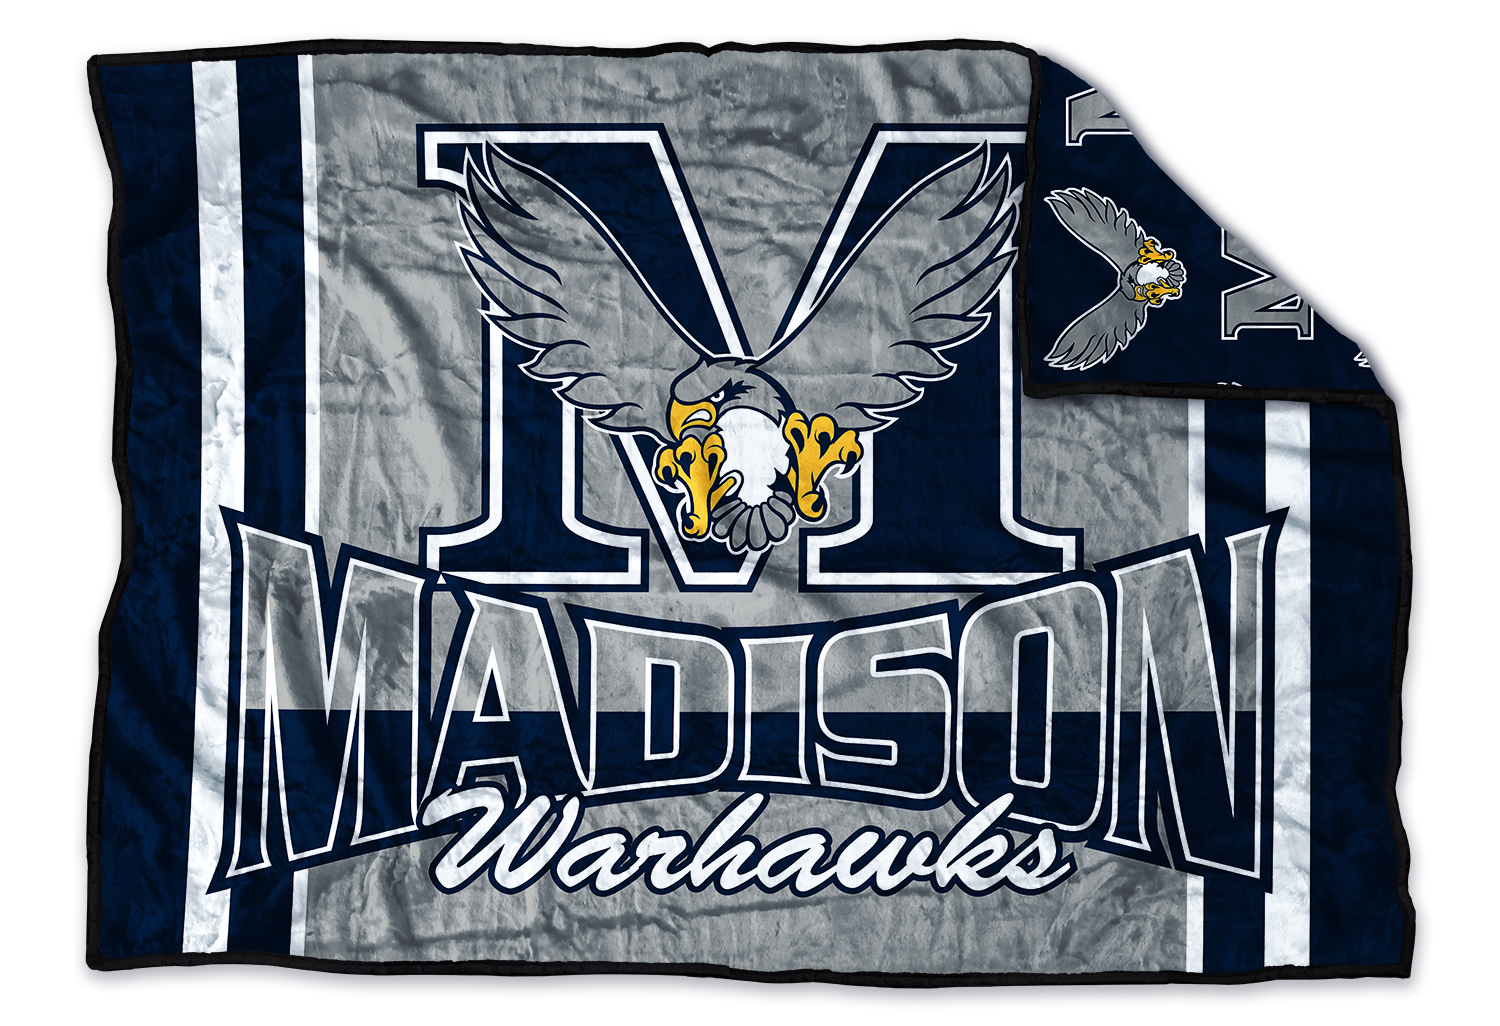 Madison Warhawks